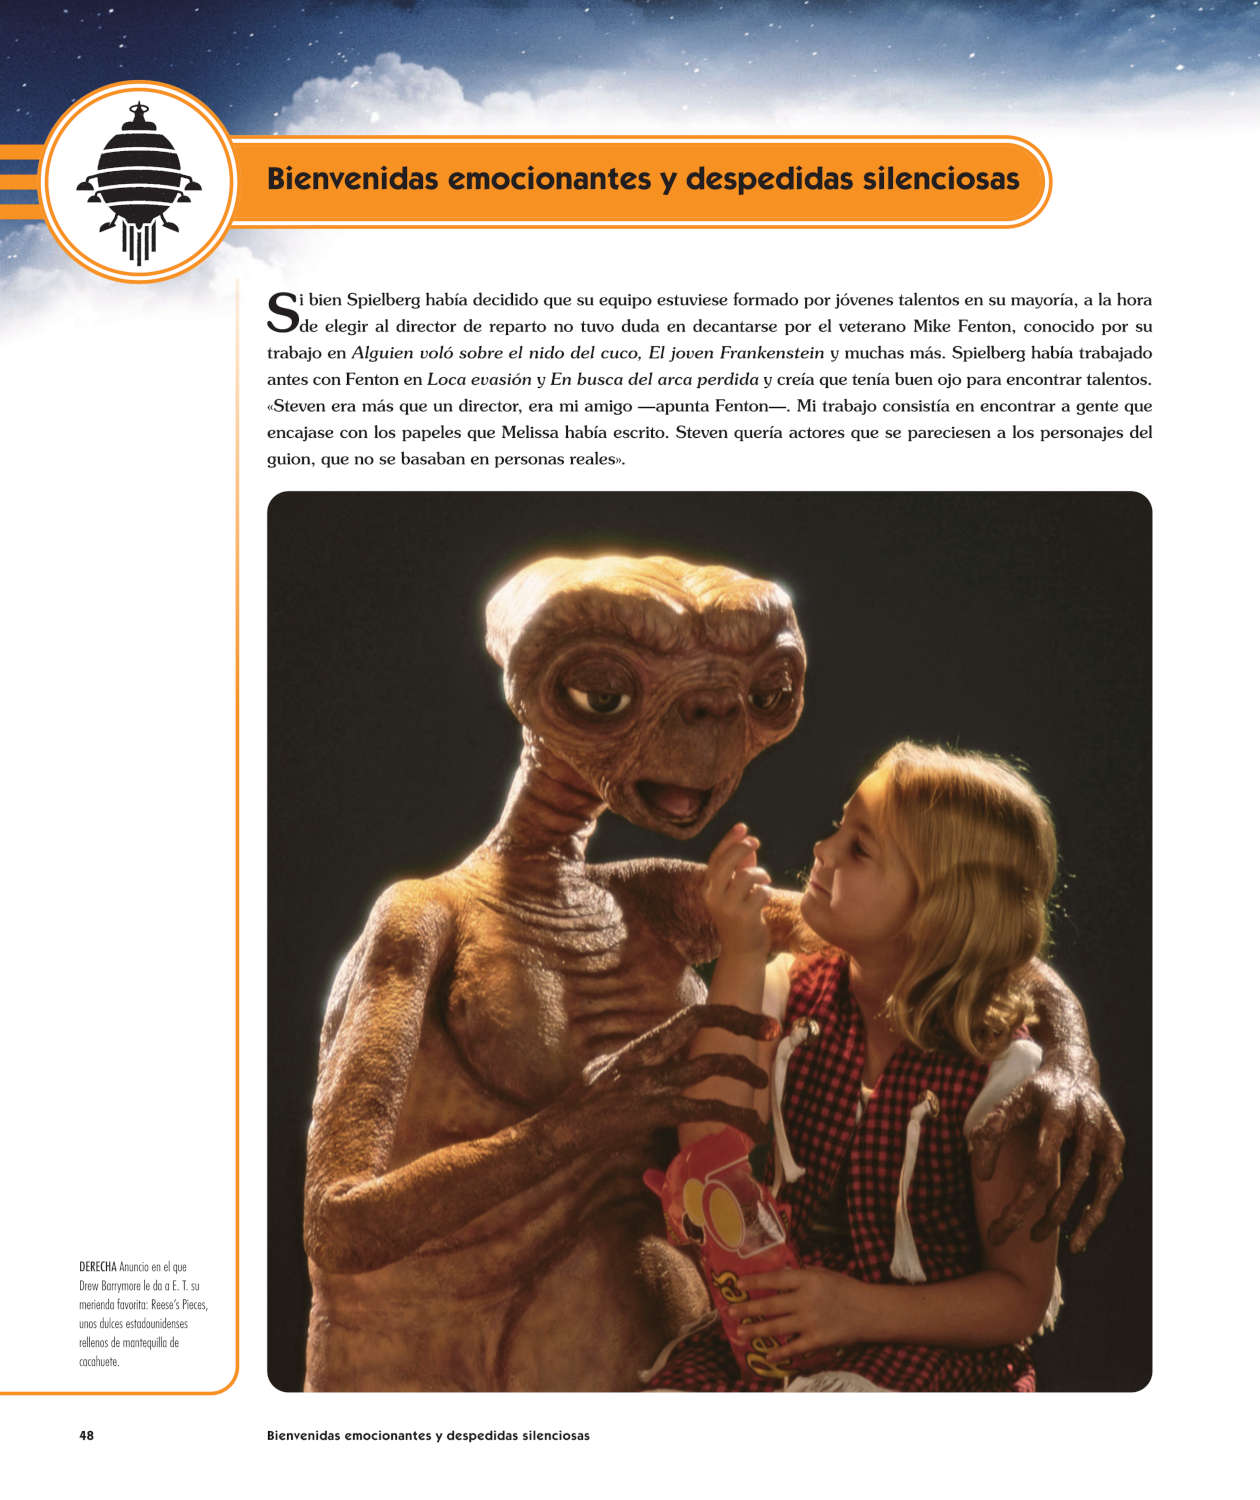 E.T. EL EXTRATERRESTRE. LA HISTORIA VISUAL DEFINITIVA - Norma Editorial